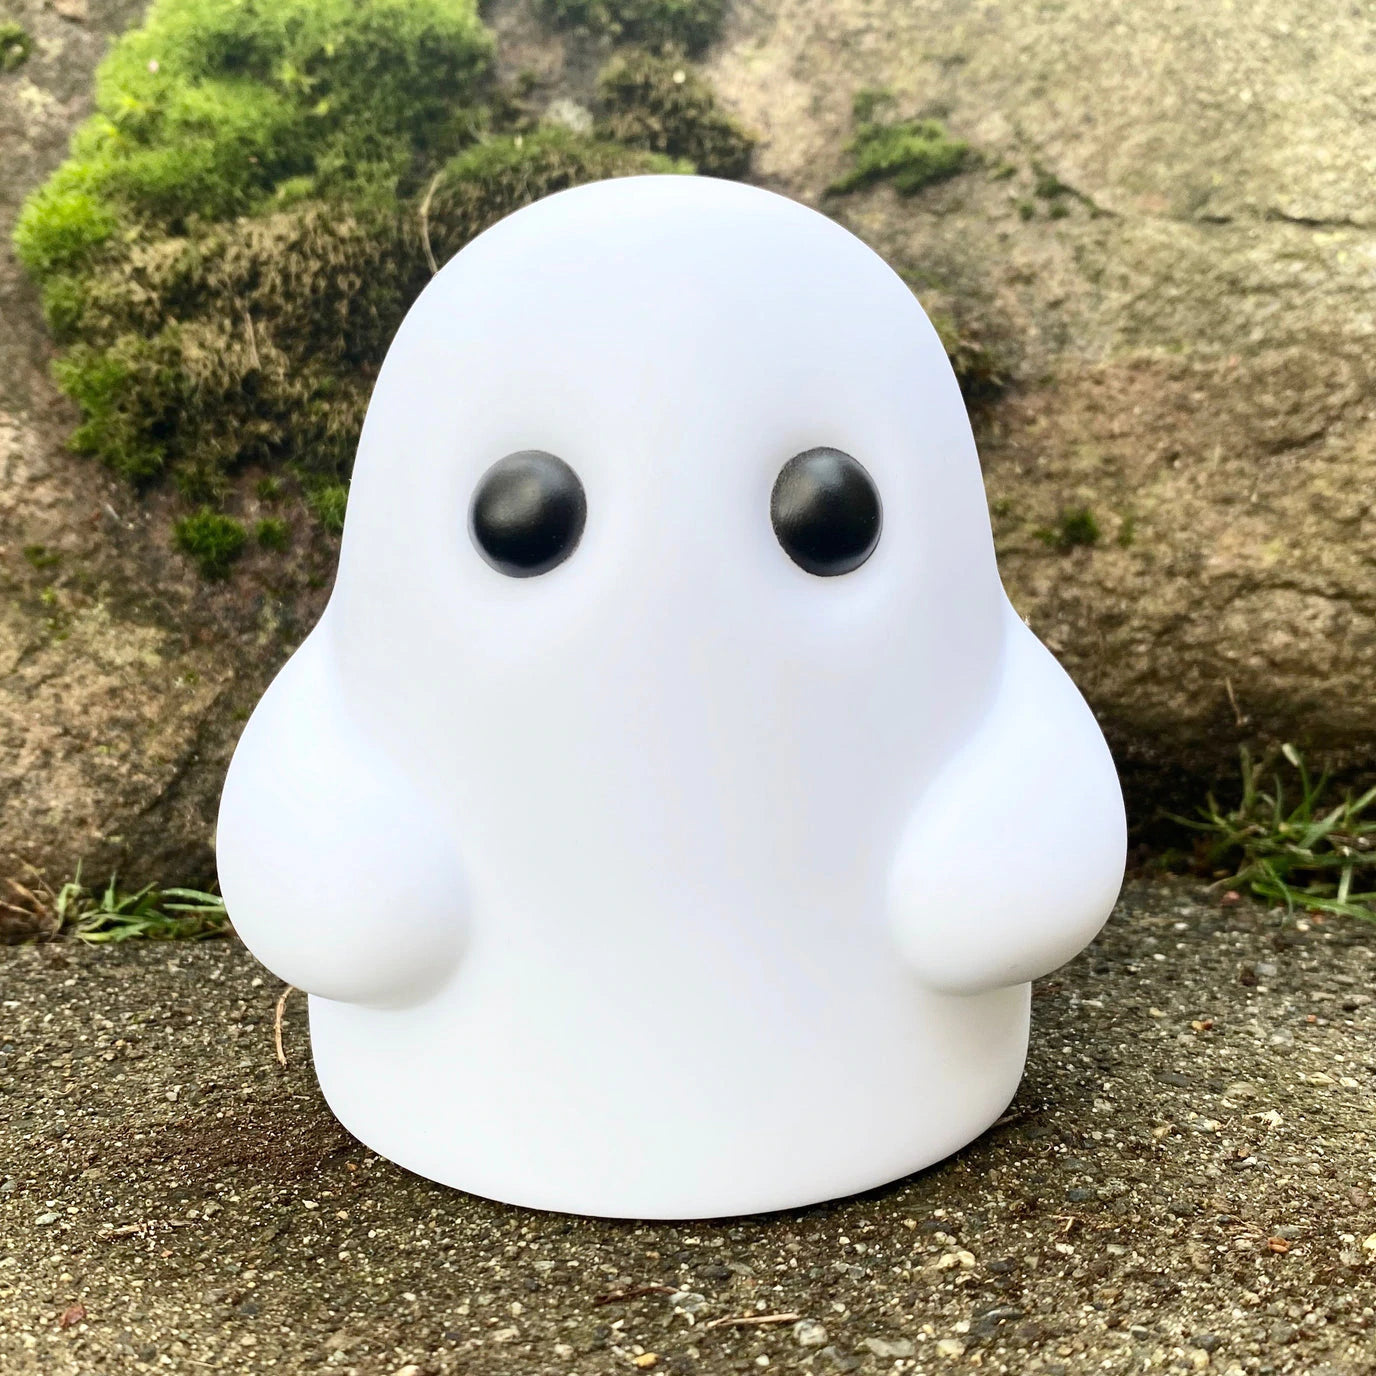 Tiny Ghost OG 3-inch vinyl Mini Figure Available Now